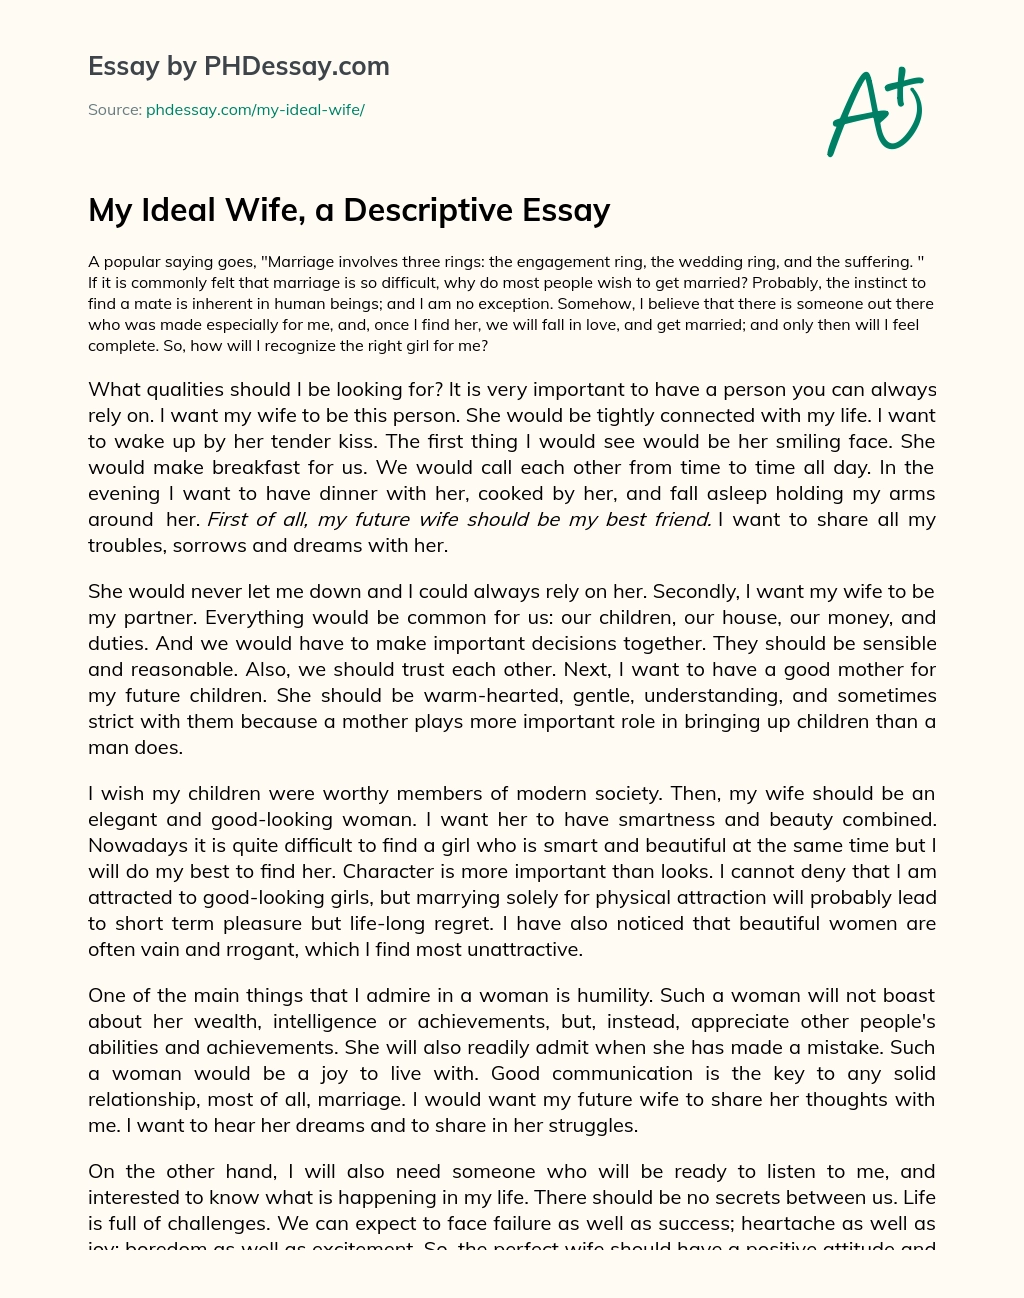 My Ideal Wife, a Descriptive Essay essay